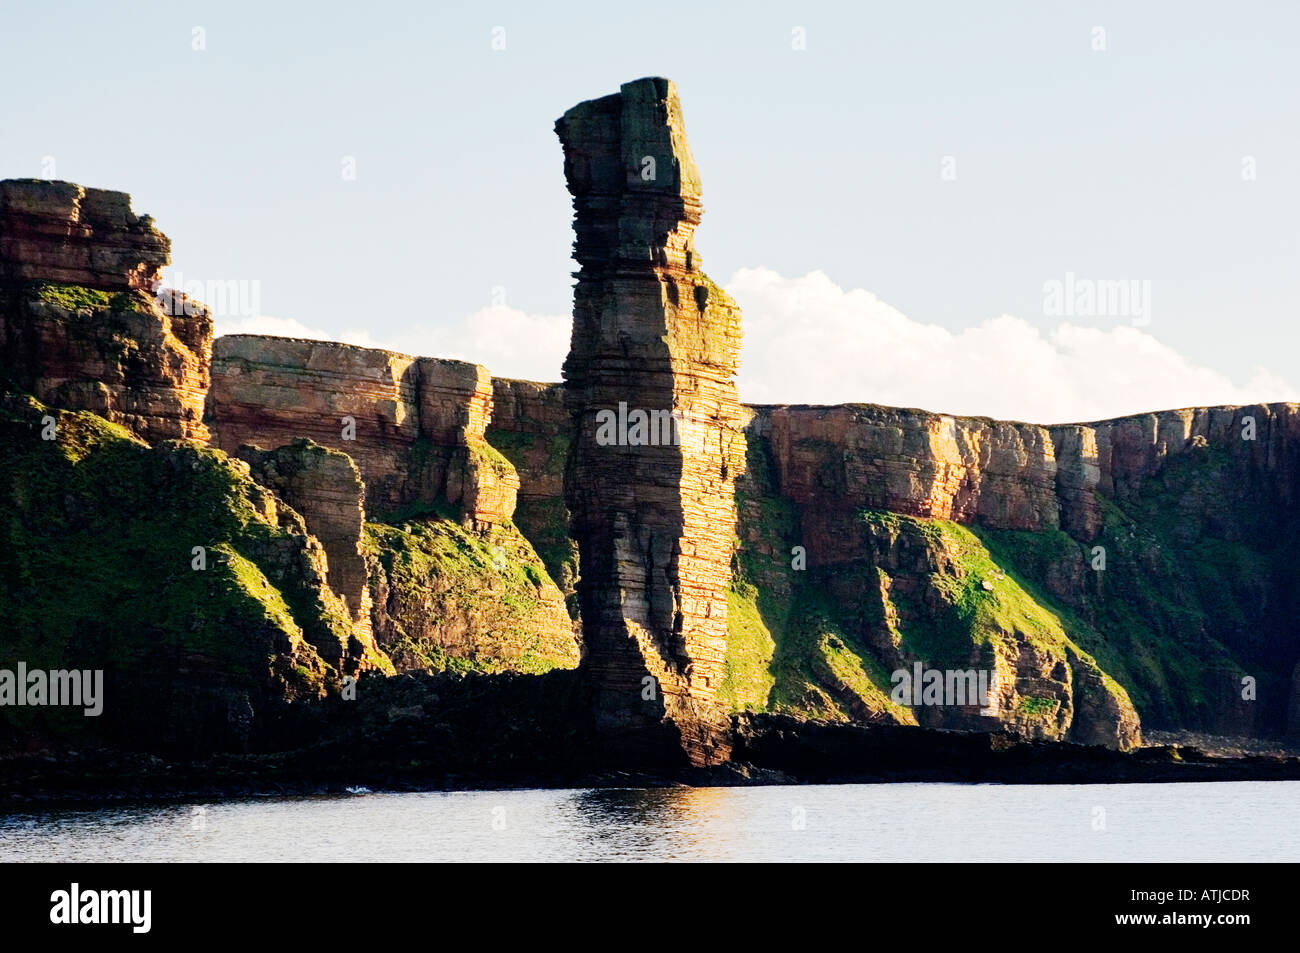 Meer-Stack Rock Pinnacle bekannt als Old Man of Hoy. Roten Sandsteinfelsen der Westküste der Insel Hoy, Orkney, Schottland, UK Stockfoto